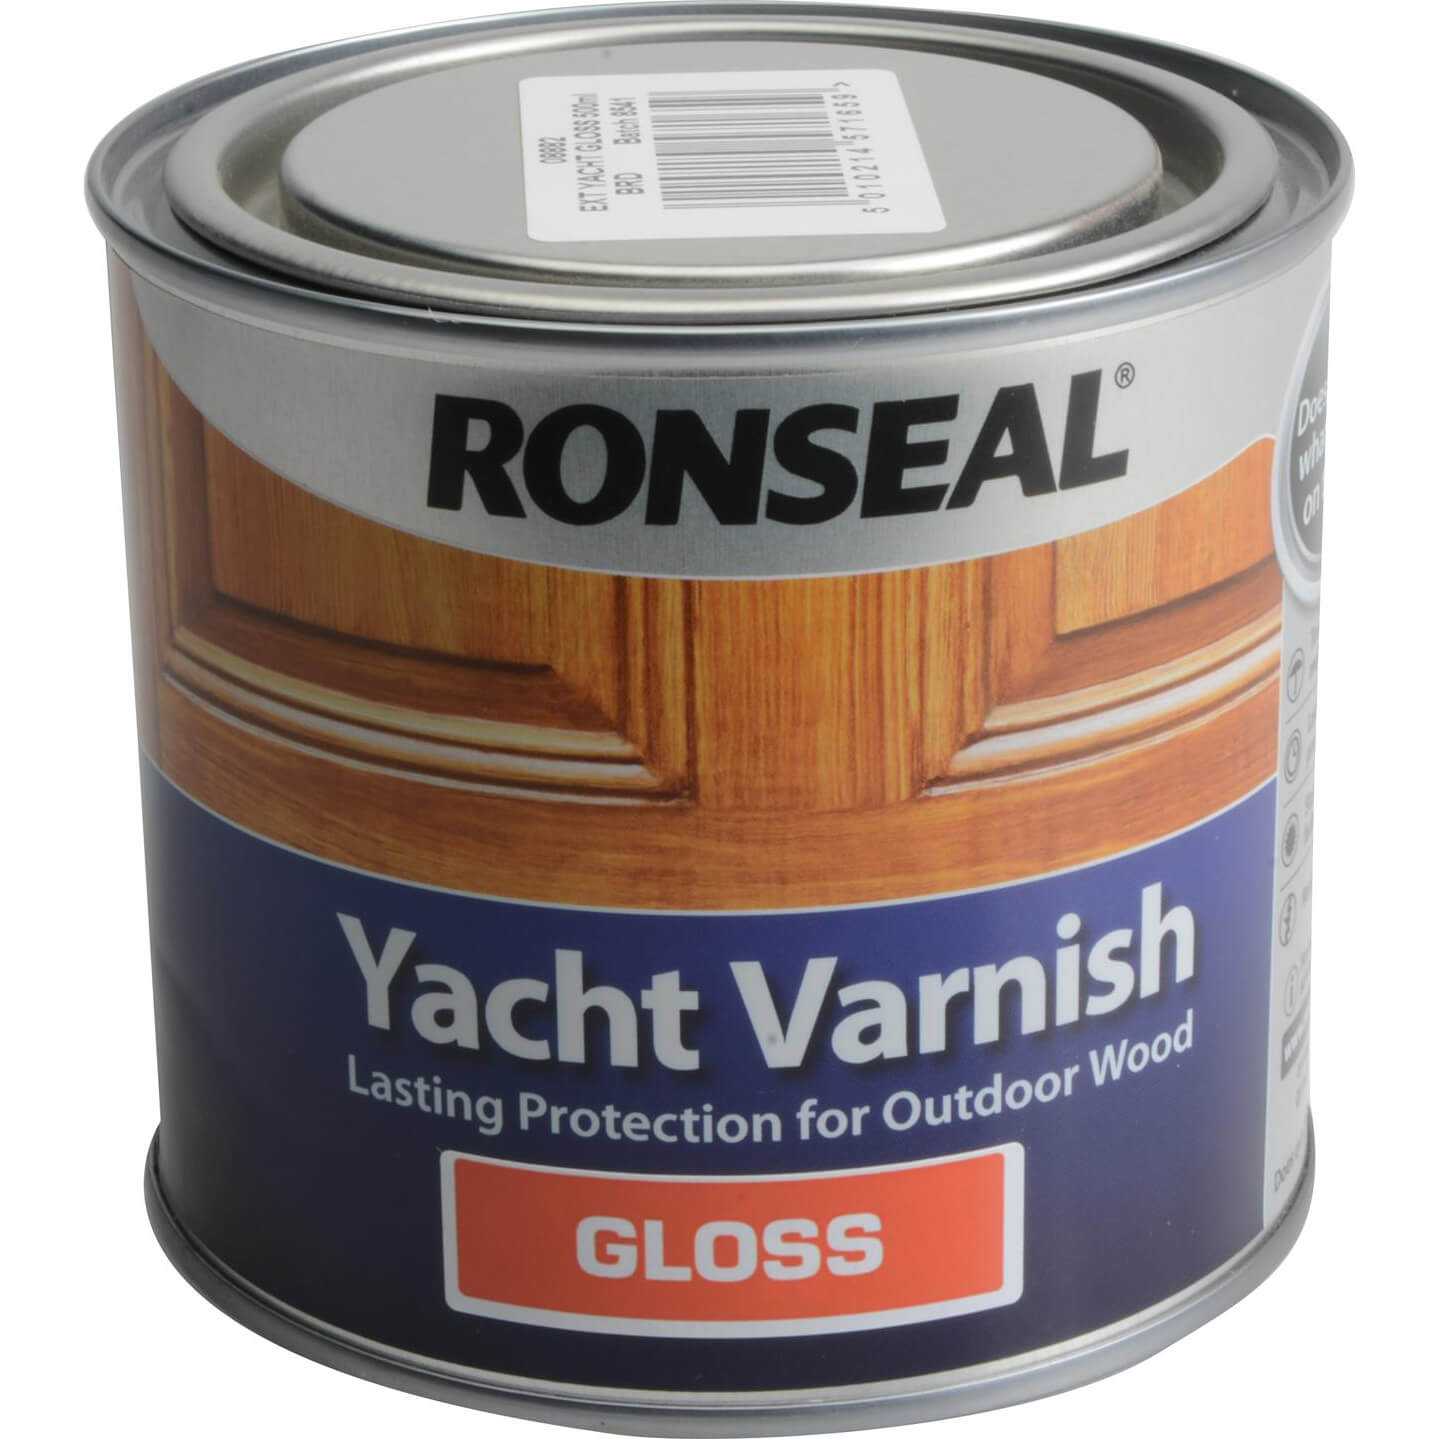 Image of Ronseal Exterior Yacht Varnish Gloss 500ml